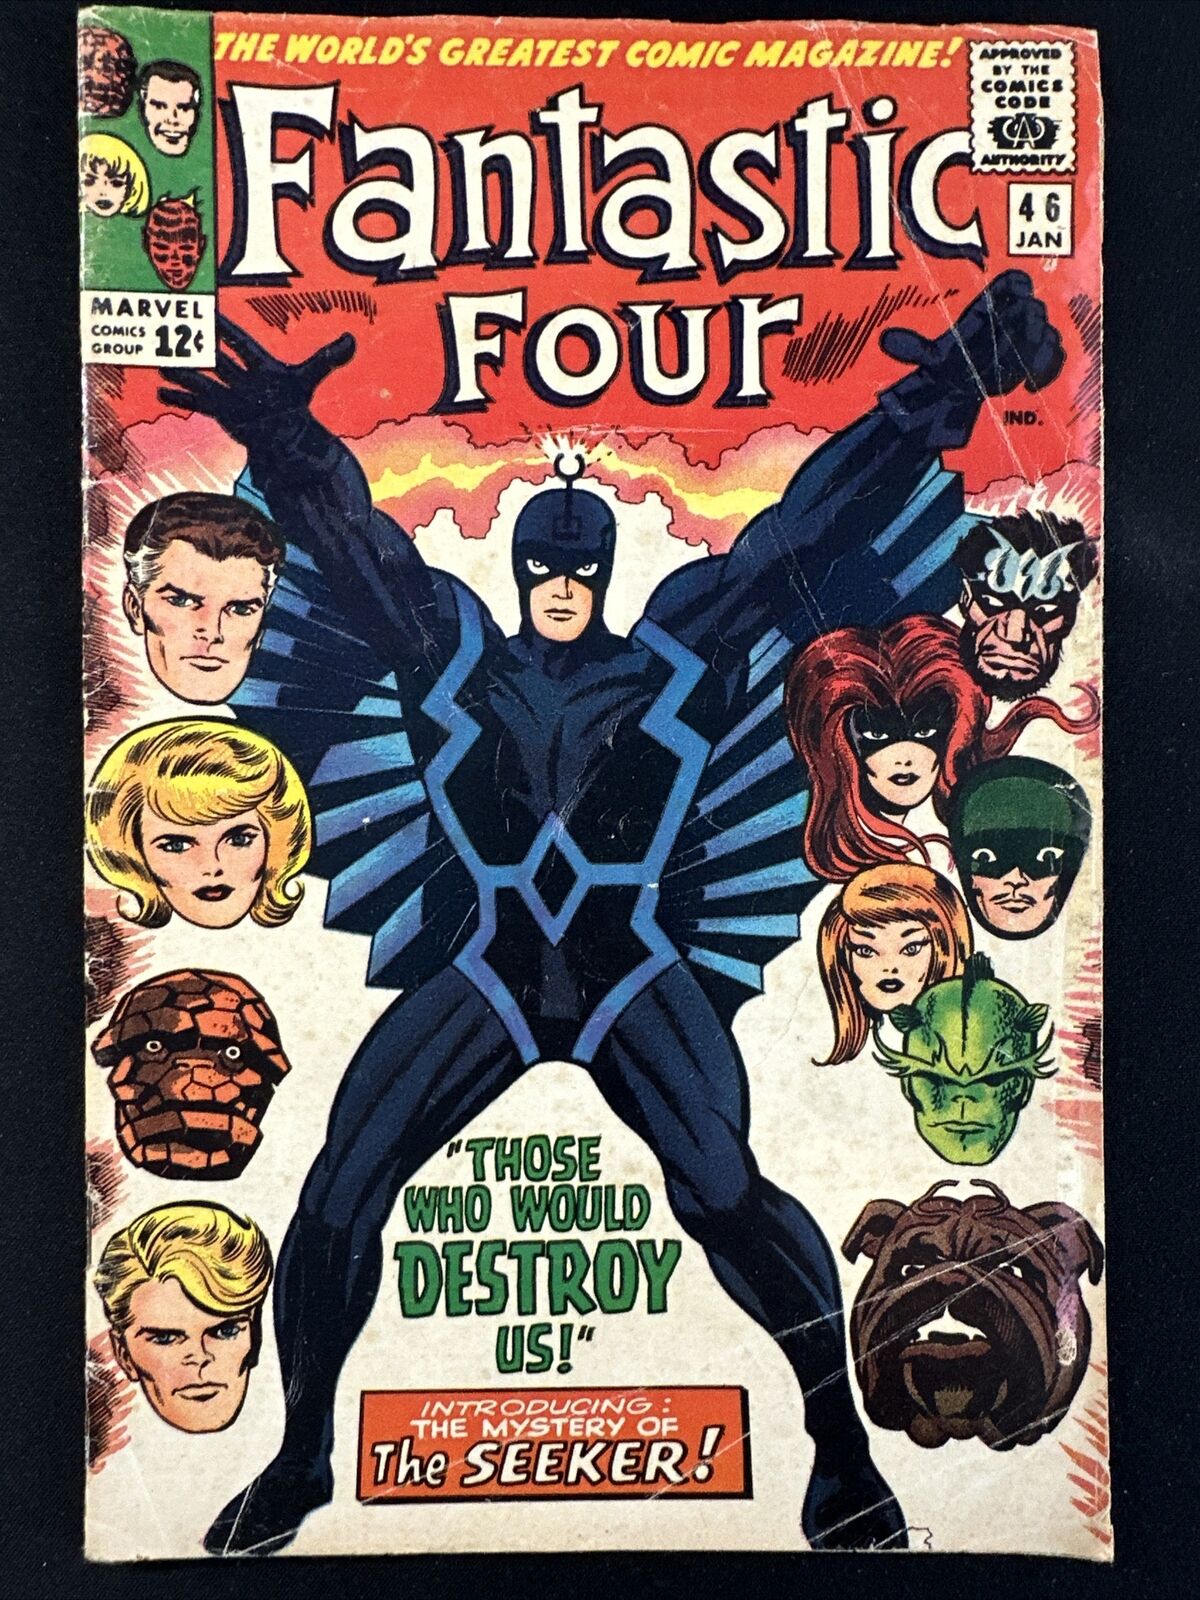 Fantastic Four #46 Marvel Comics Vintage Old Silver Age 1966 1st Print Good+ *A1